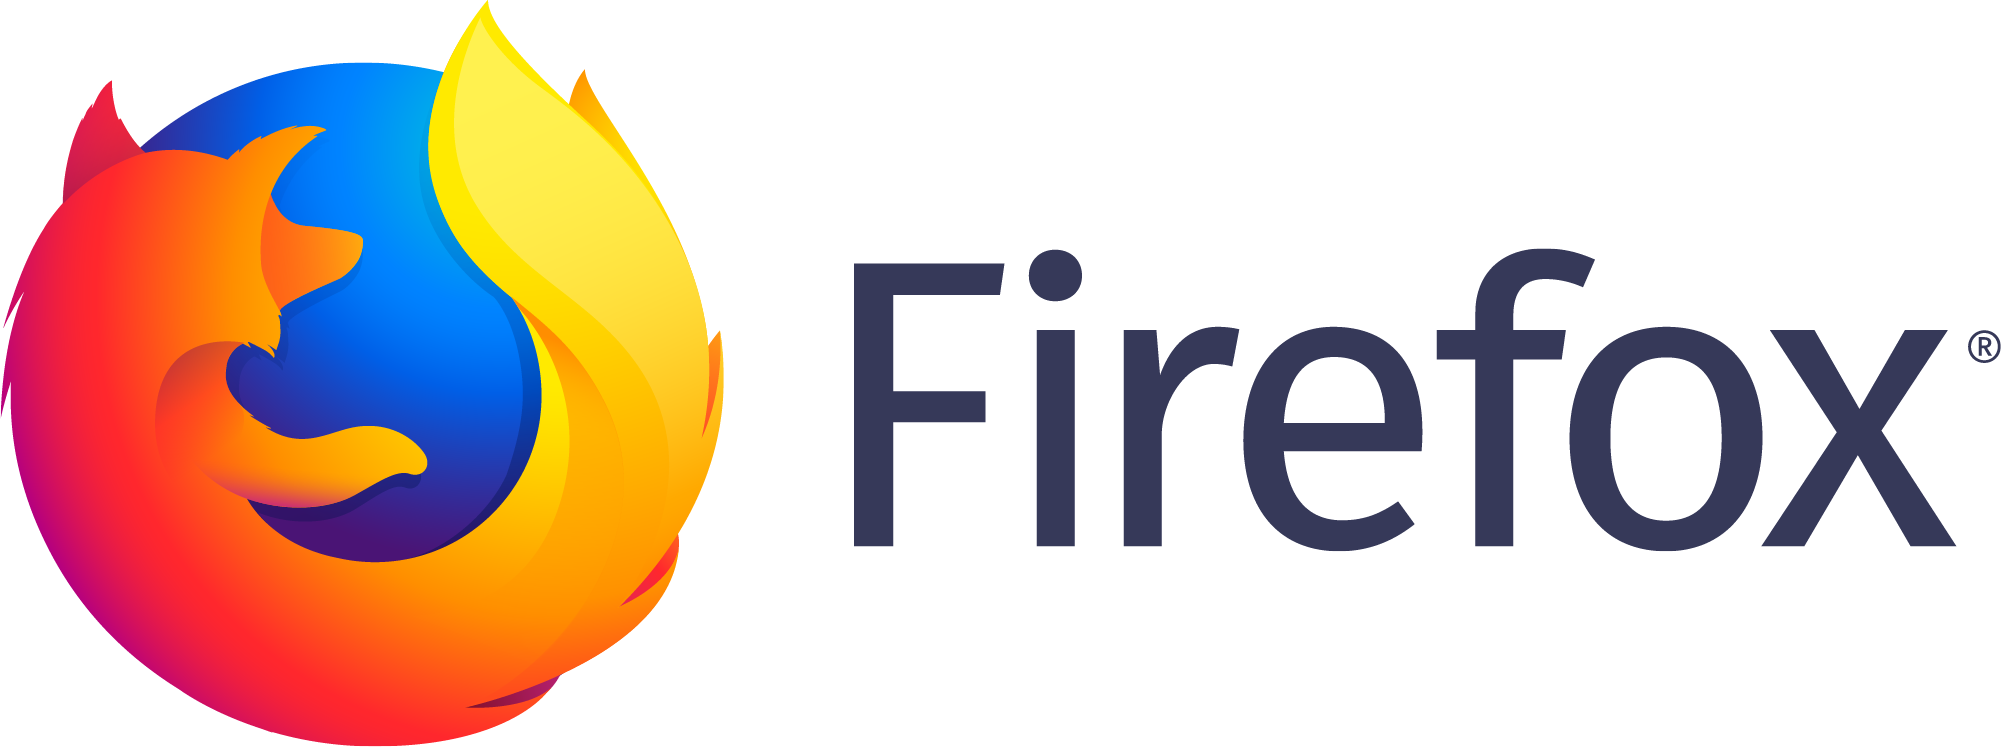 Software Spotlight: Firefox